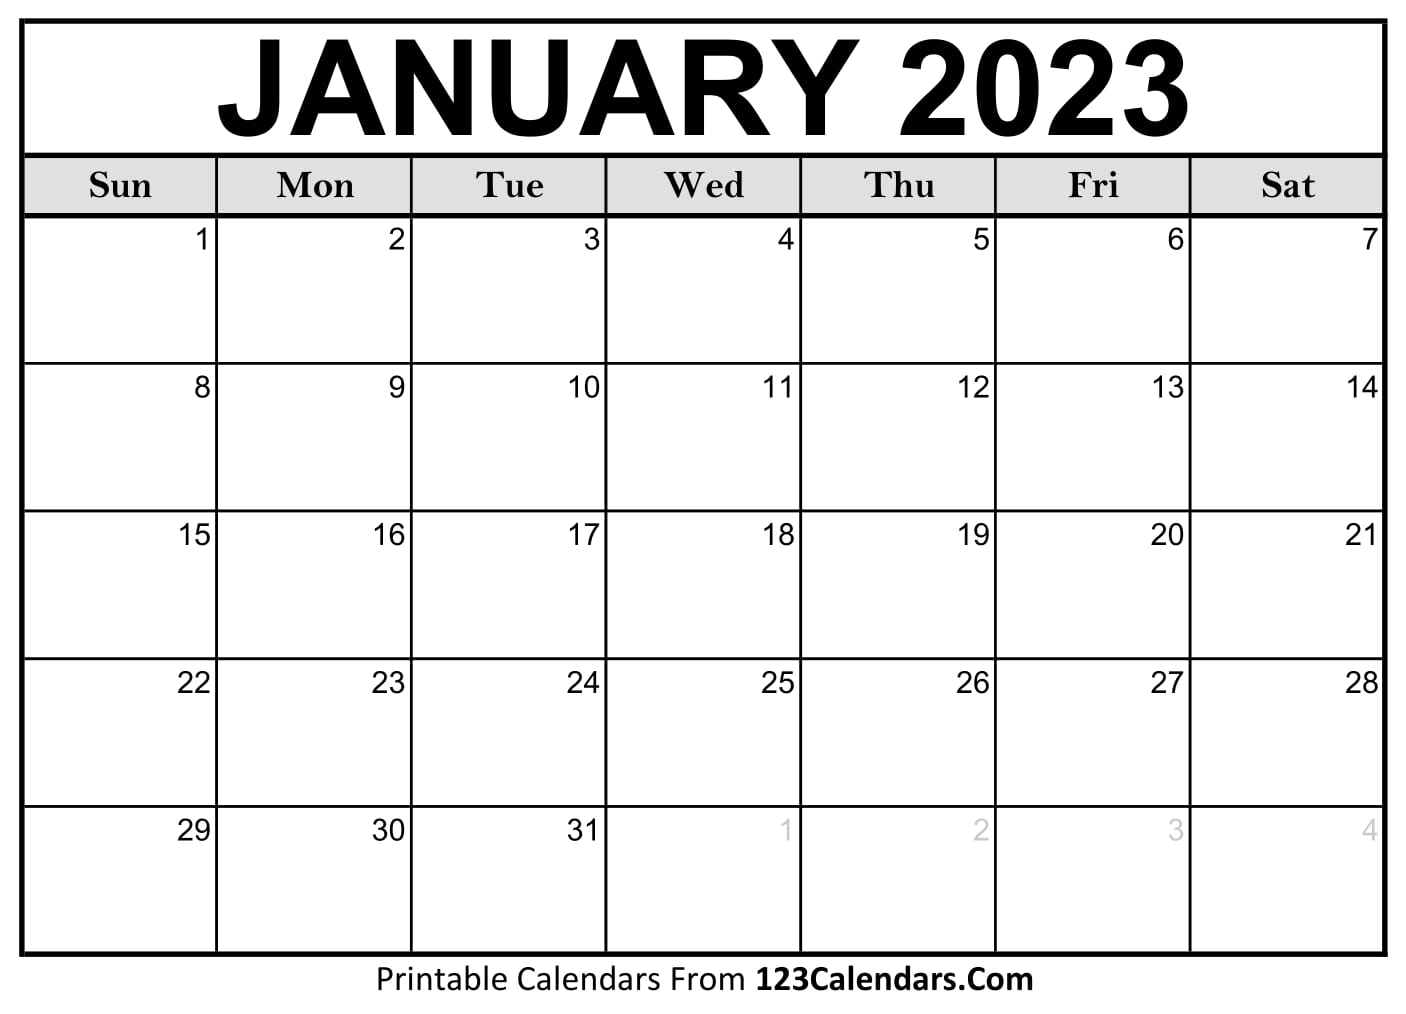 January 2023 Calendar Free Printable Calendar January 2023 Calendar Free Printable Calendar